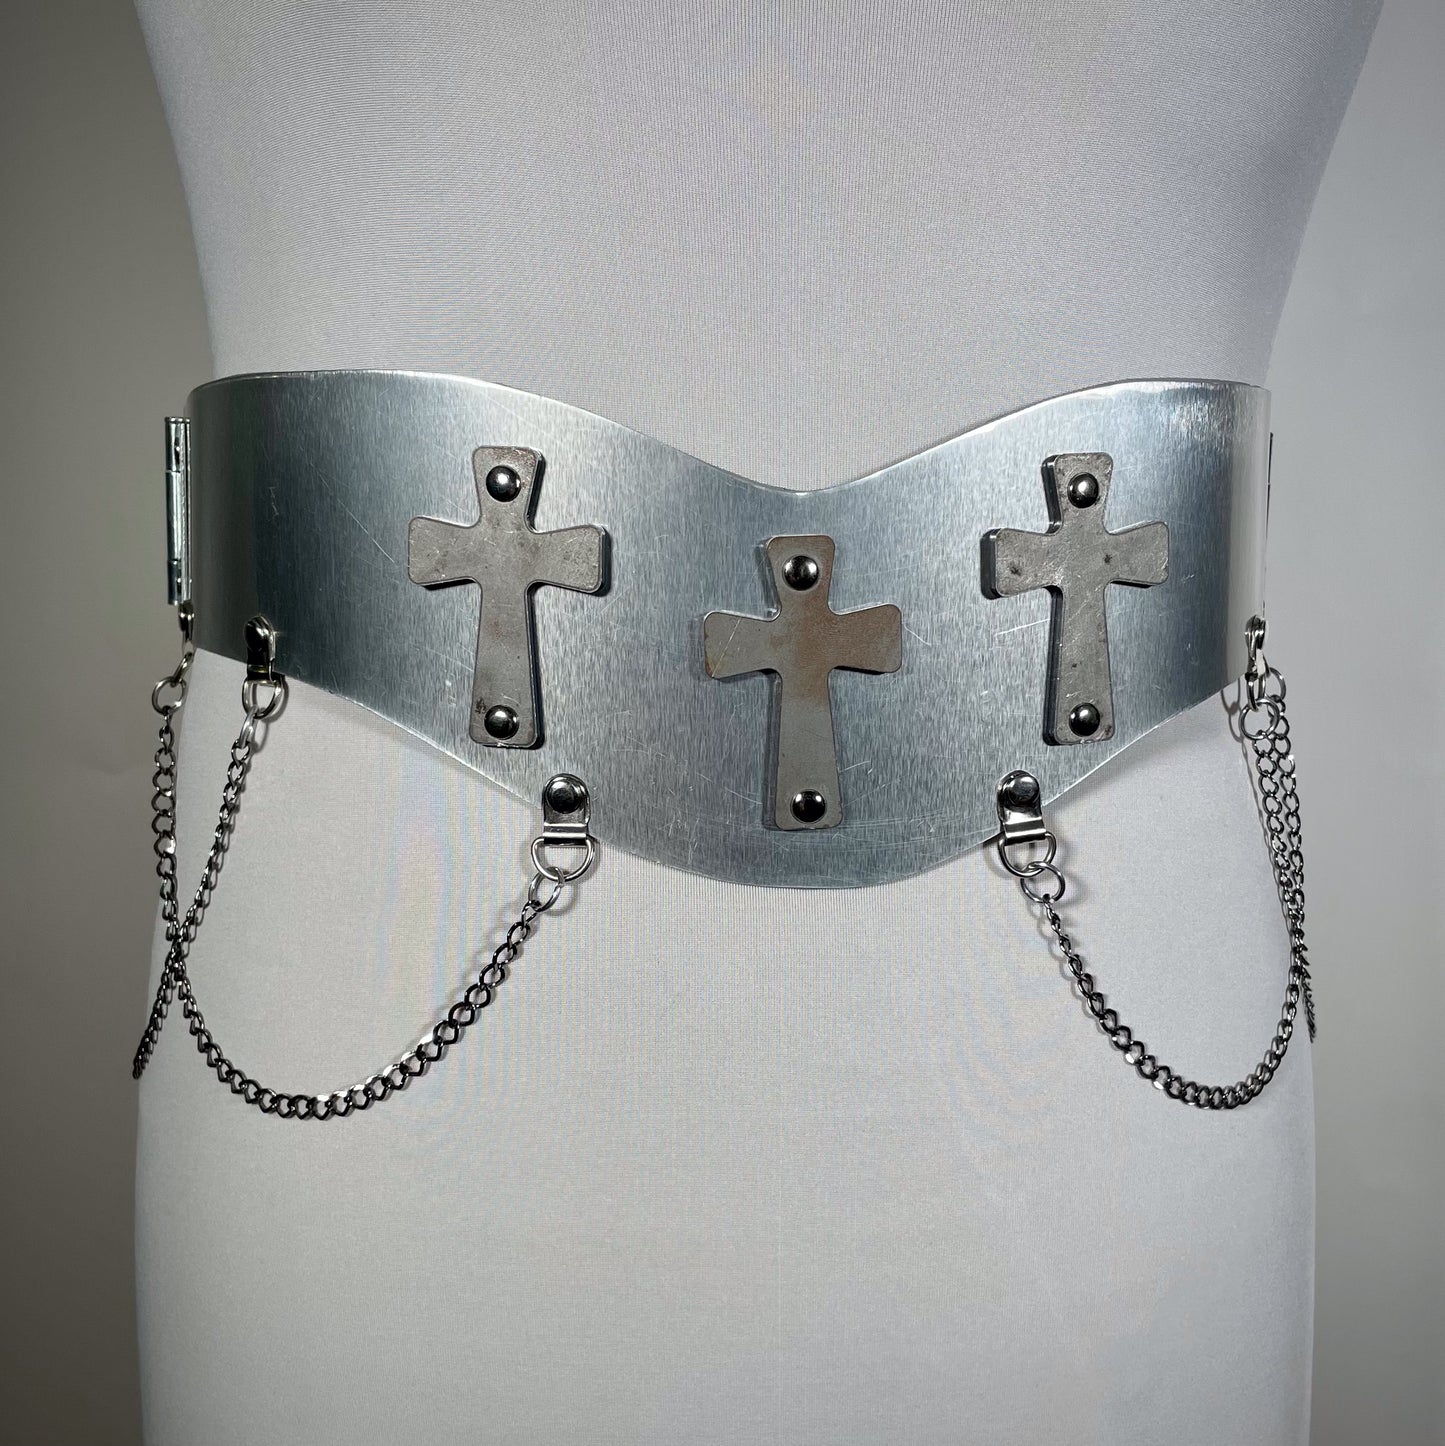 Metal cross chain corset belt industrial tradgoth cosplay game of thrones armor industrial deathrock goth